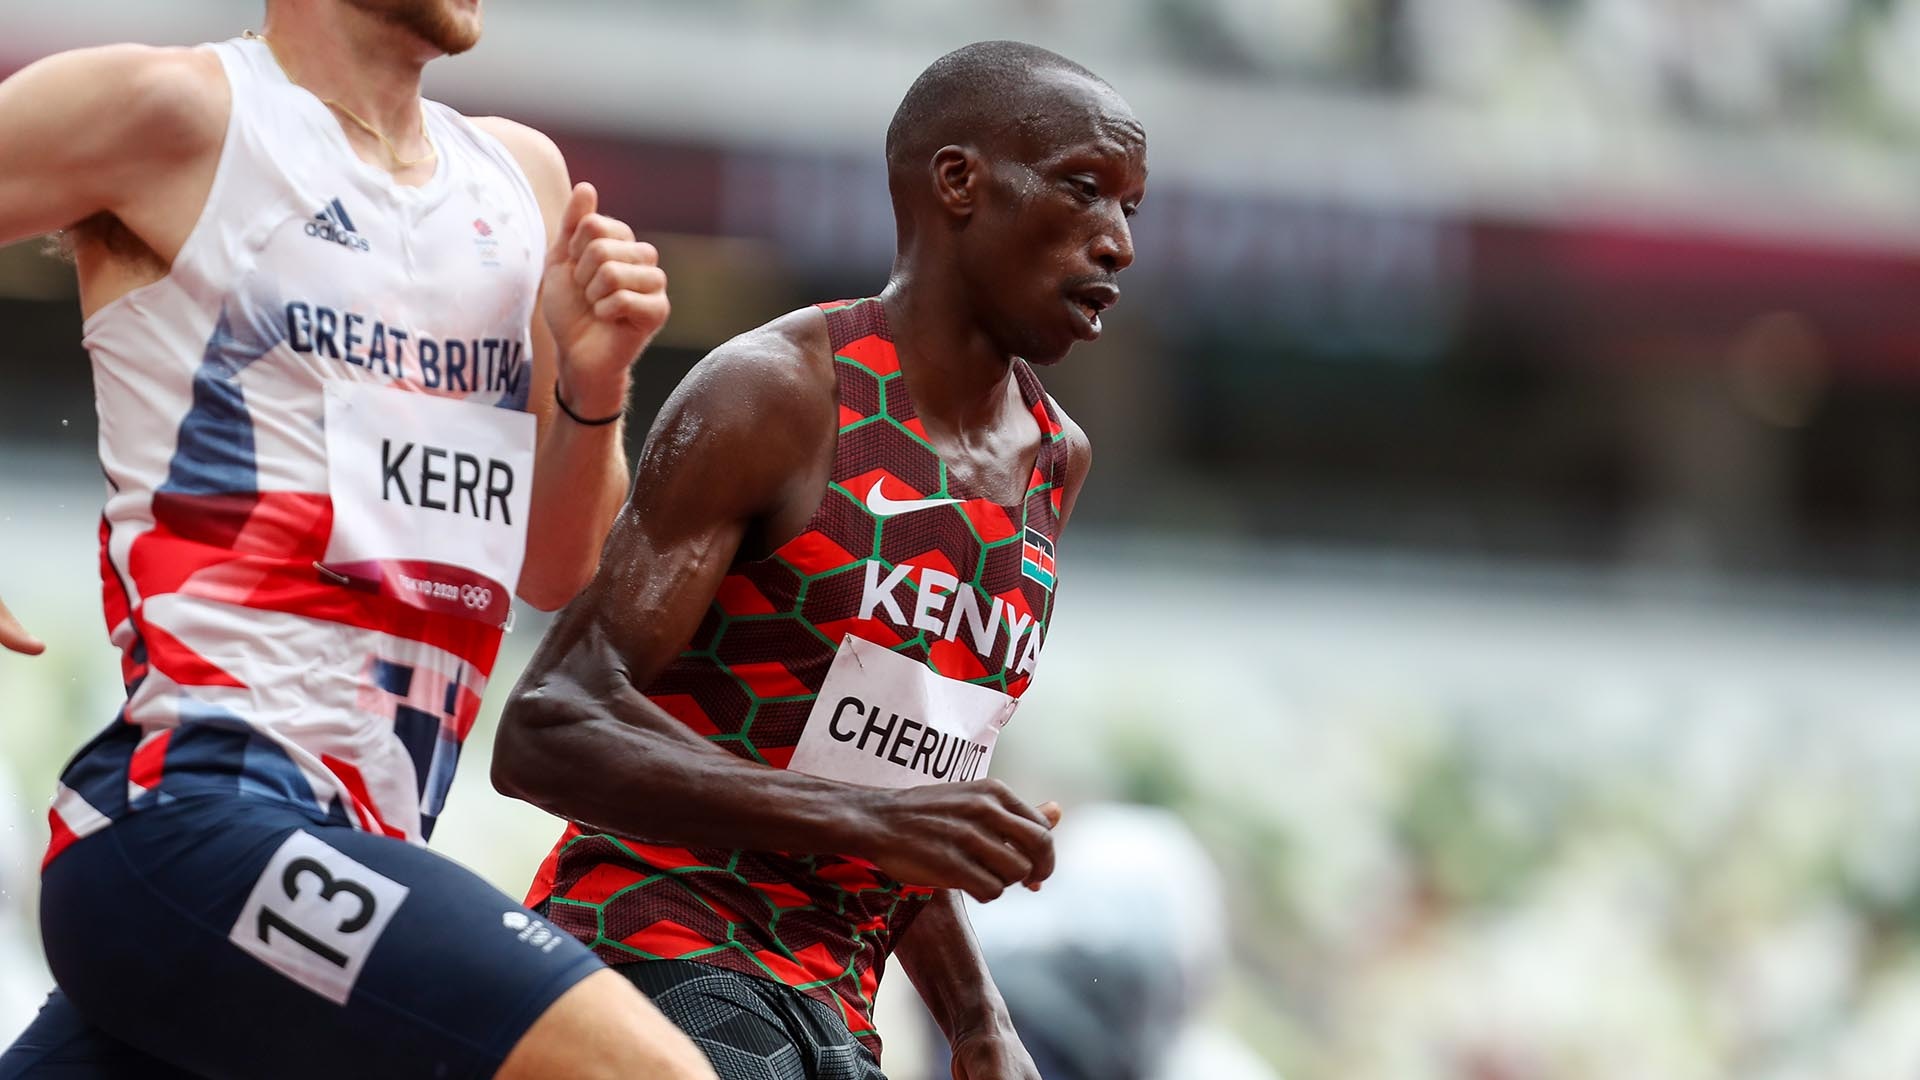 Timothy Cheruiyot, Kenyan runner, 1, 500m semis, Quest for gold, 1920x1080 Full HD Desktop